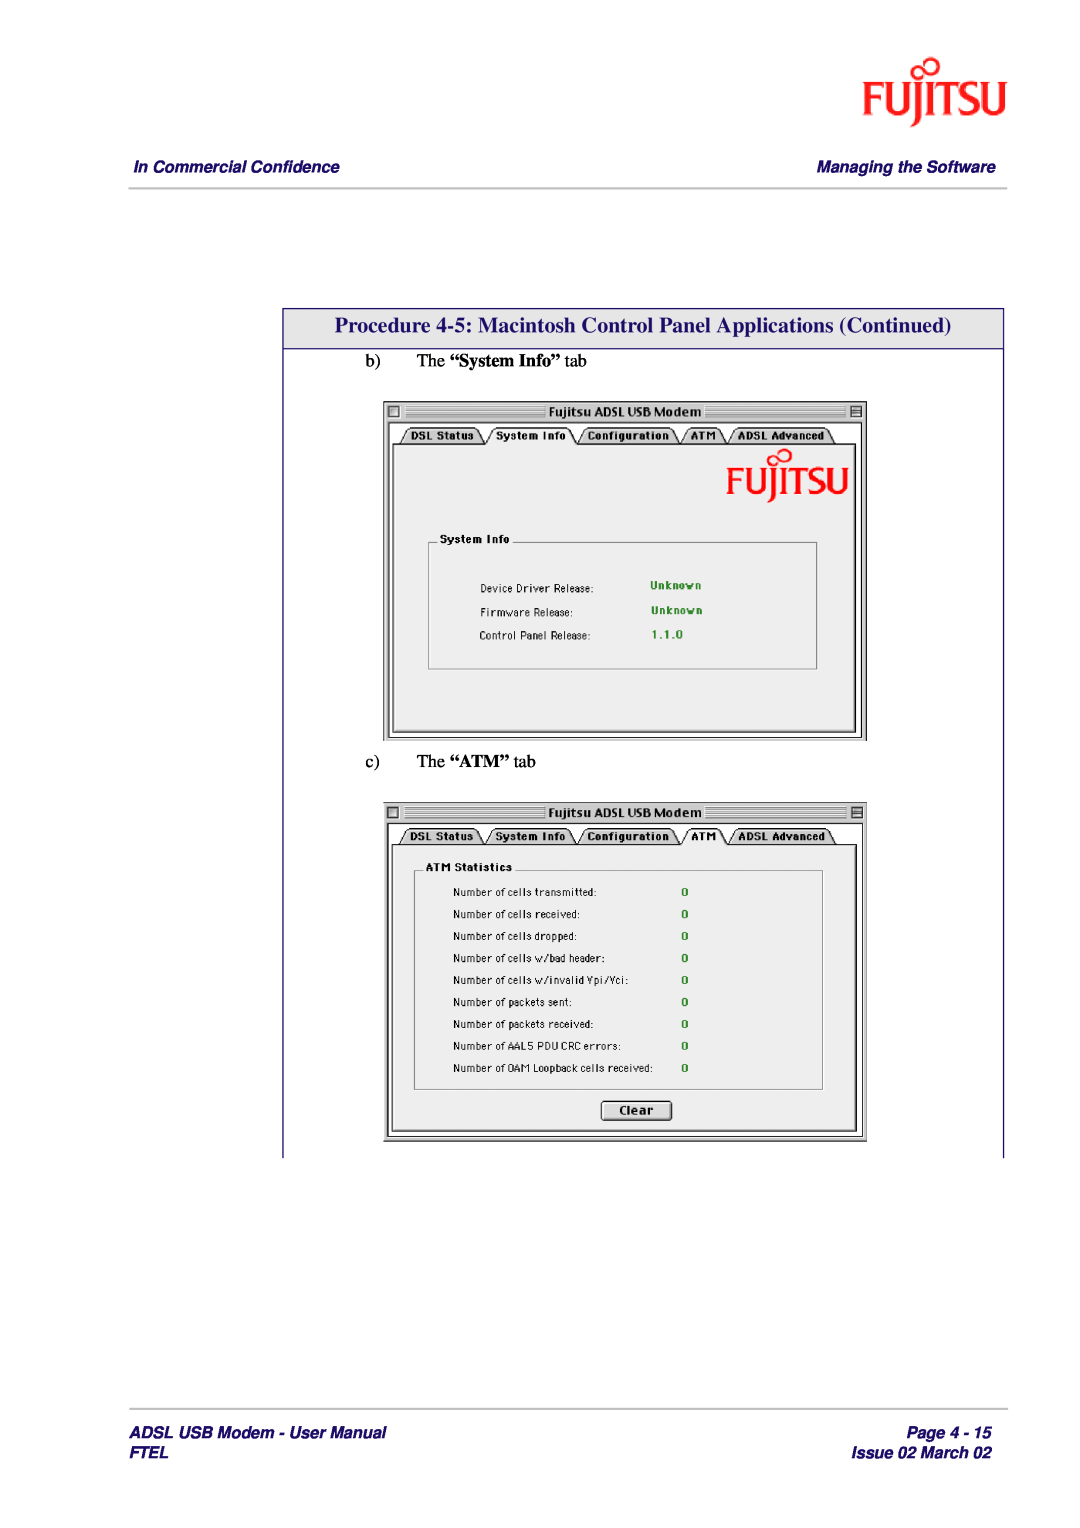 Fujitsu 3XAX-00803AAS Procedure 4-5 Macintosh Control Panel Applications Continued, b The “System Info” tab, Page 4, Ftel 